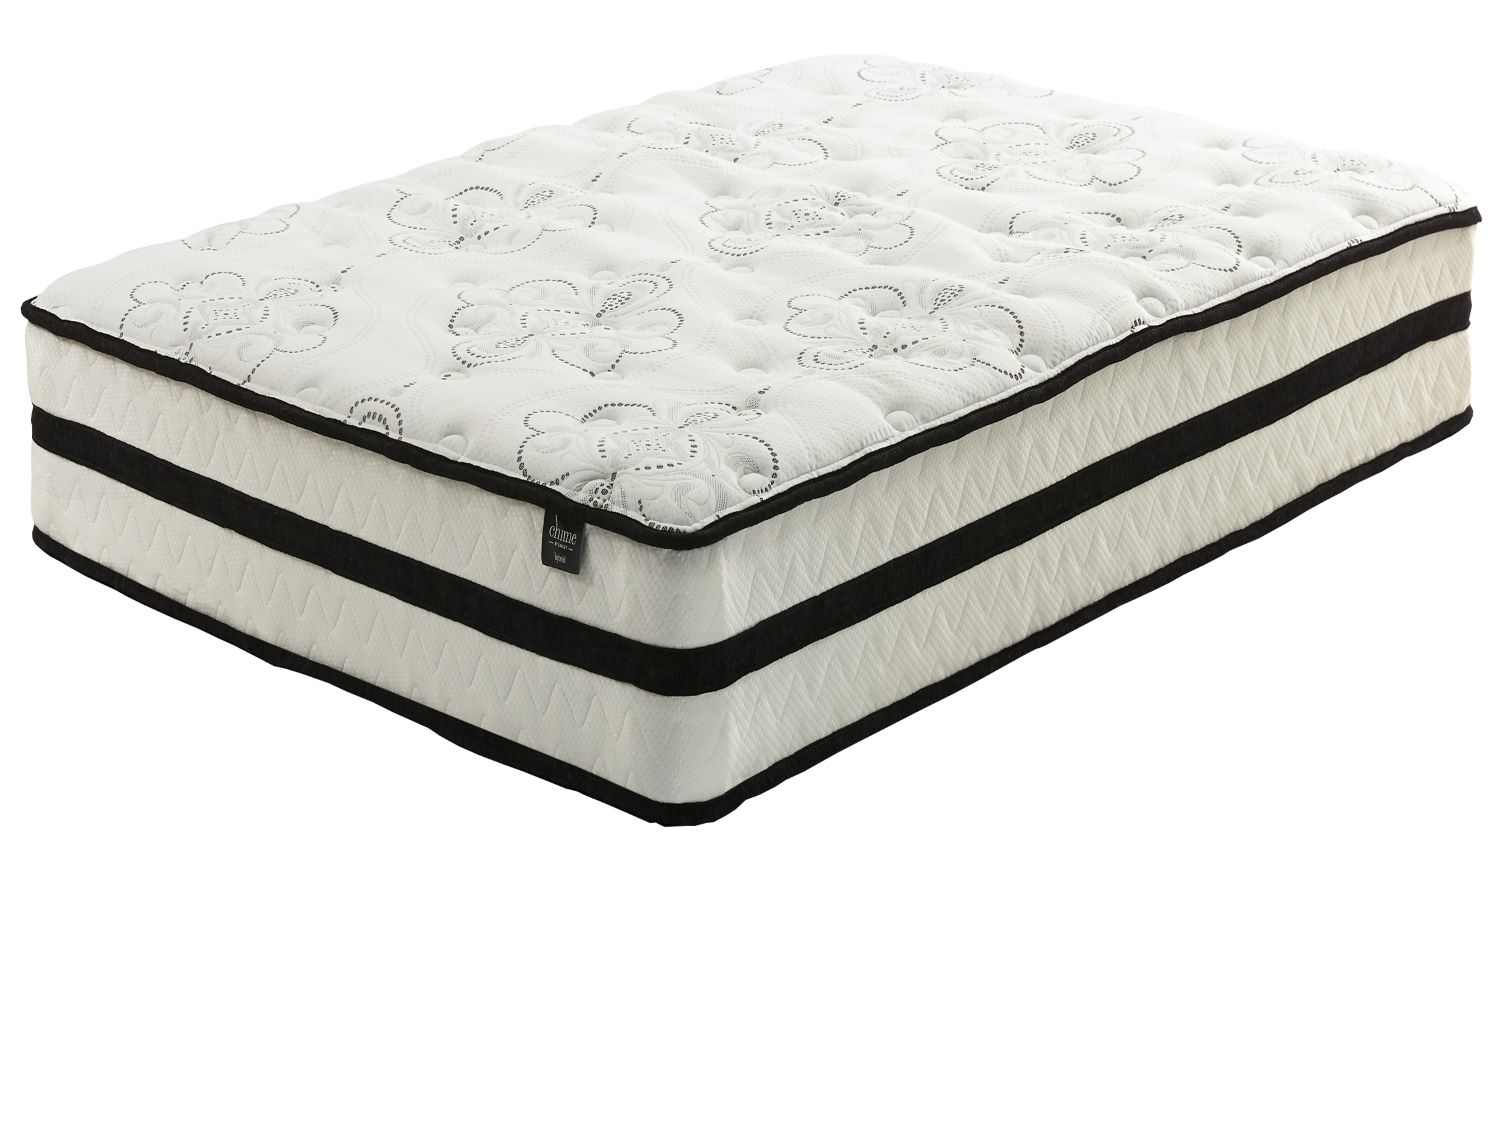 ashley m696 chime 10 hybrid mattress